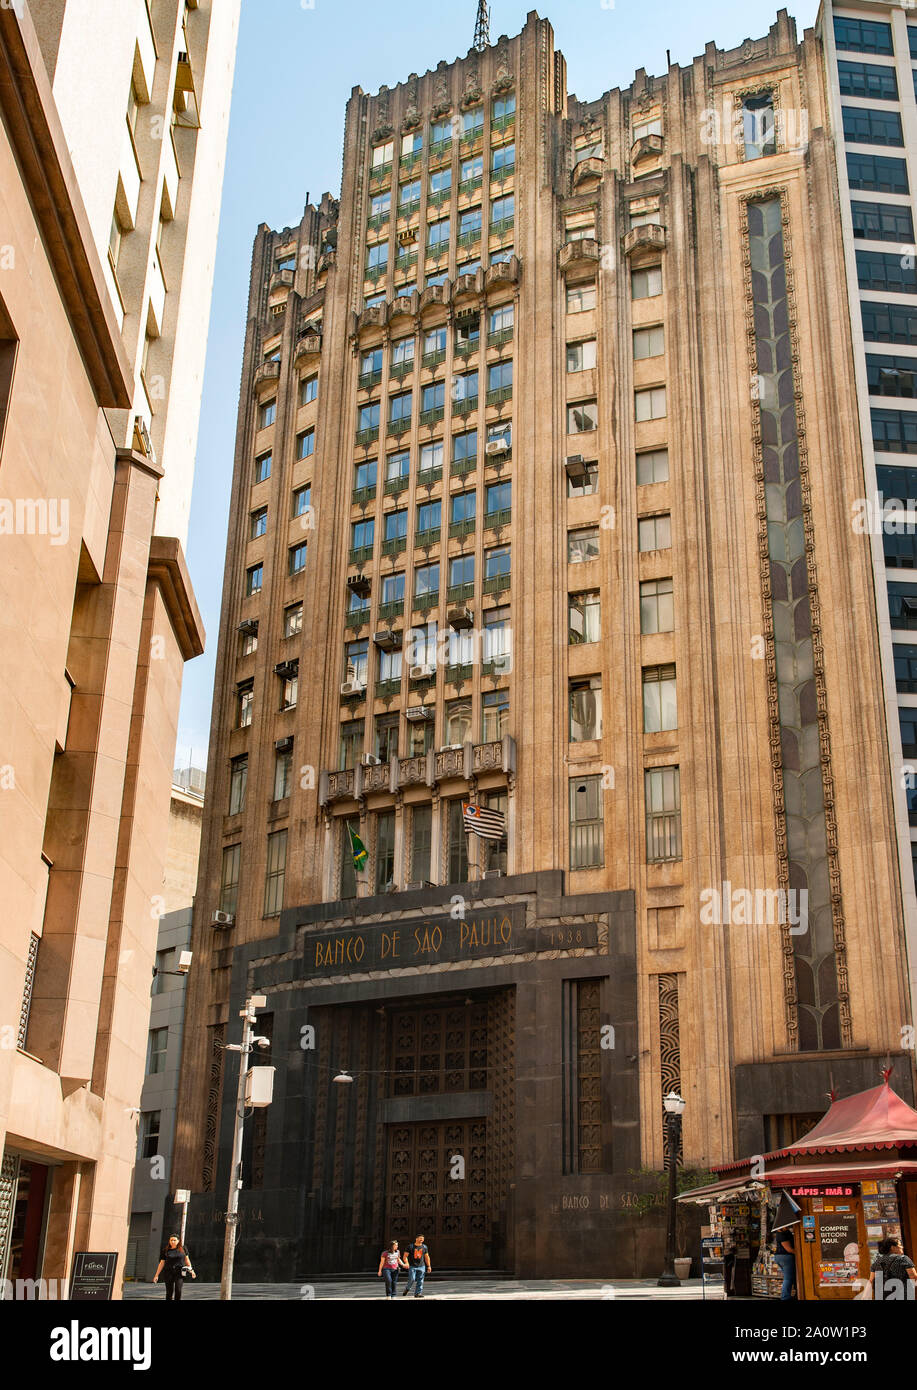 The old Banco de São Paulo building in São Paulo, Brazil. Stock Photo